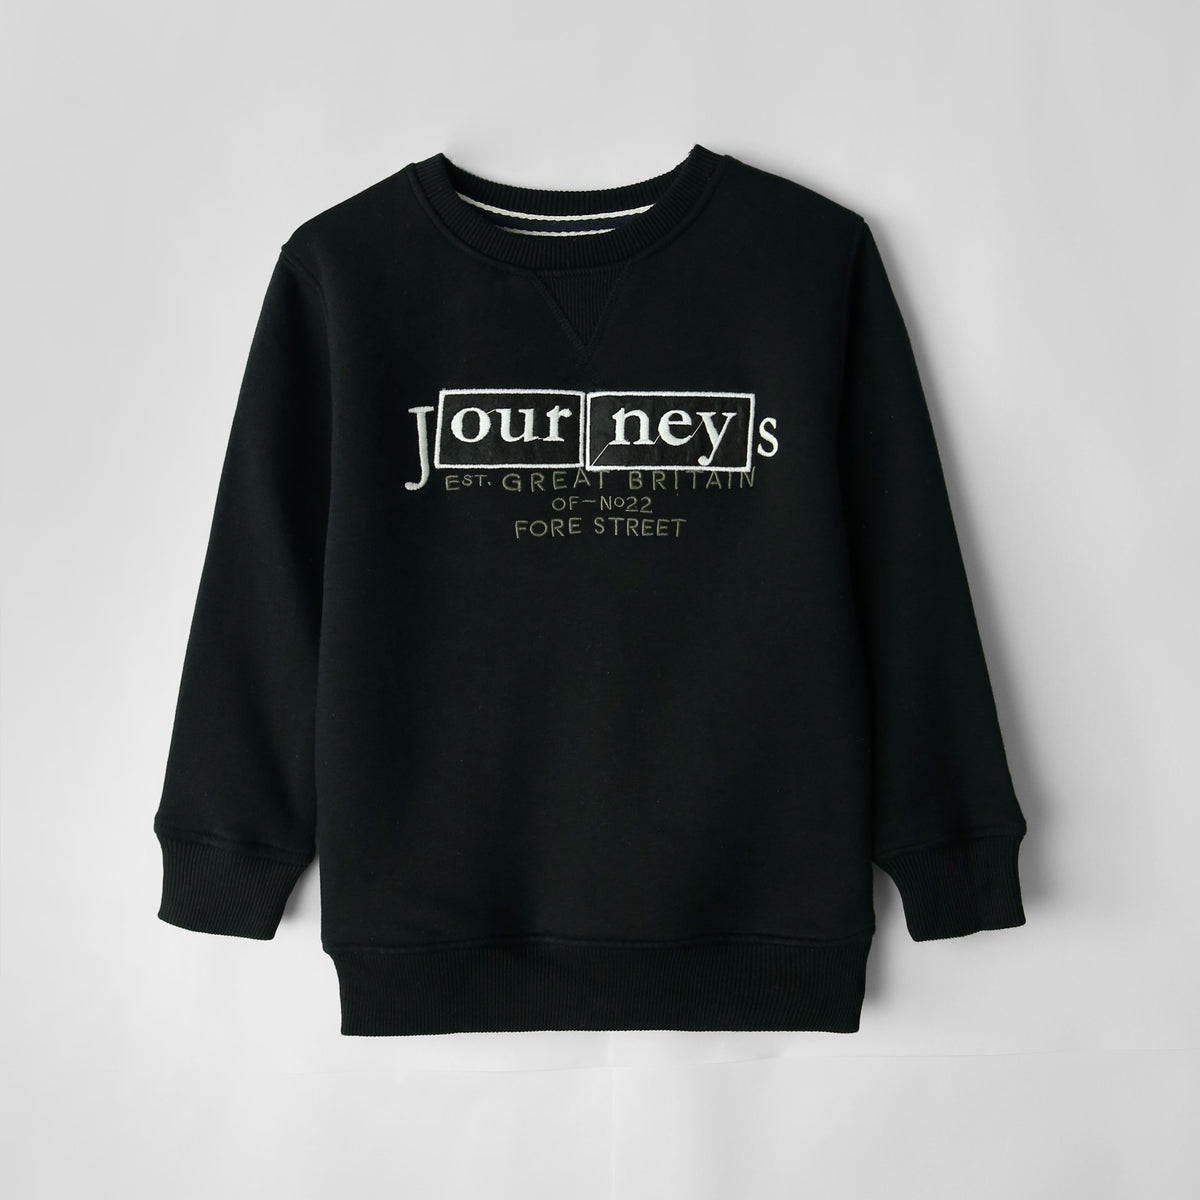 Premium Quality Embroidered Fleece Black Sweatshirt For Kids